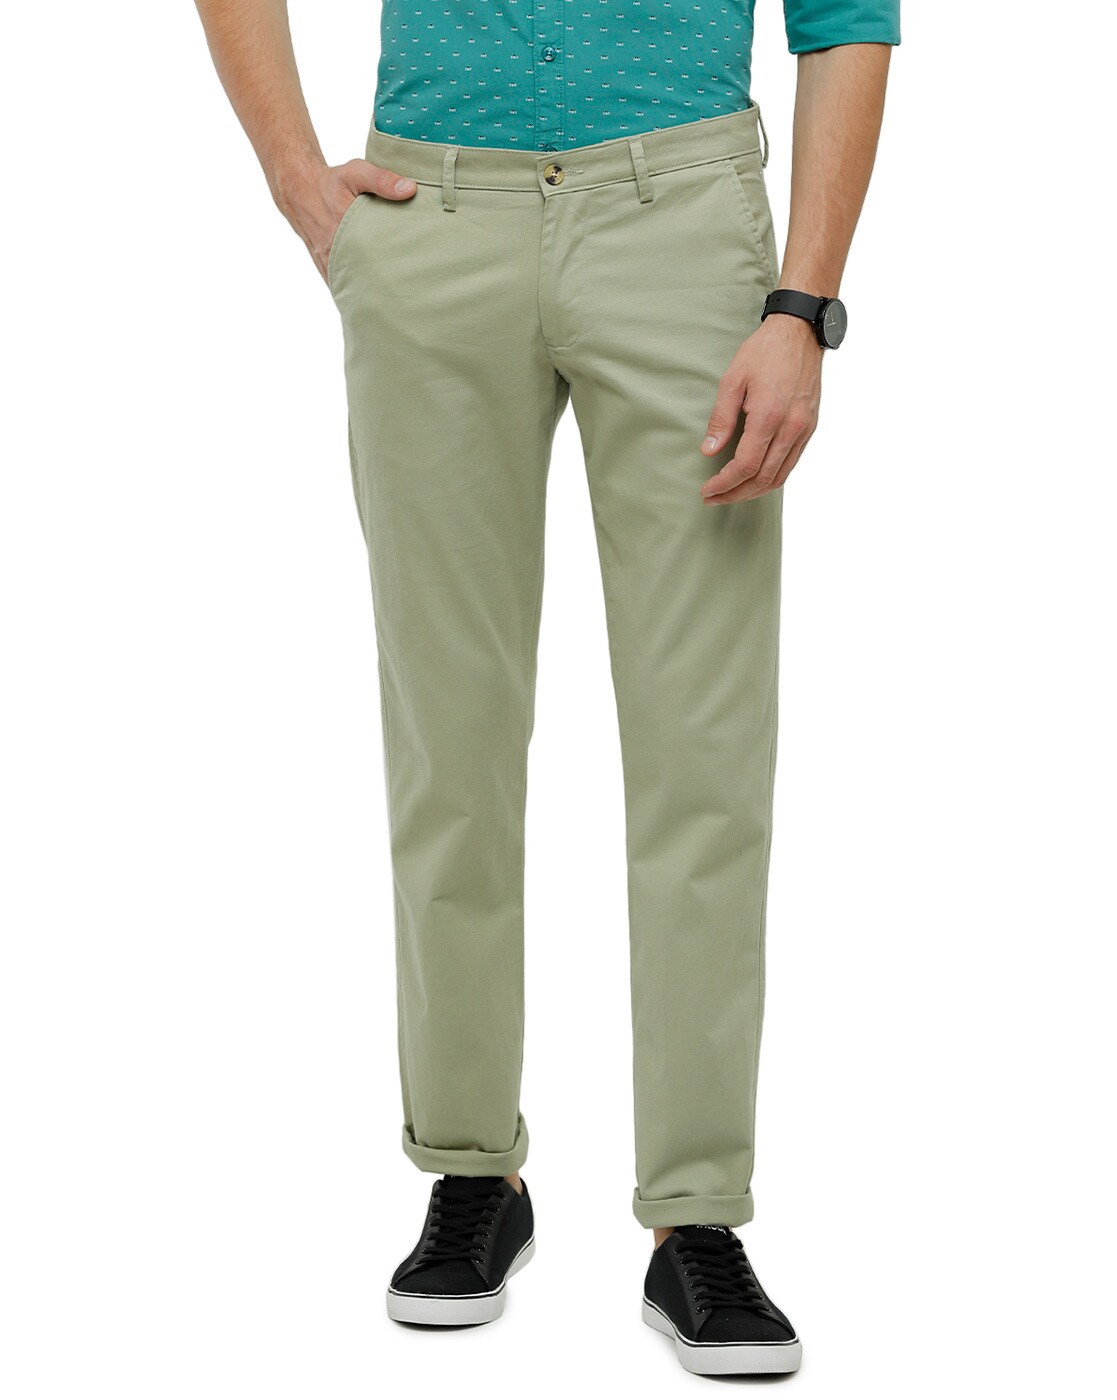 Inseam of Pants: Men's Tall Five Pocket Fatigue Green Pant – American Tall